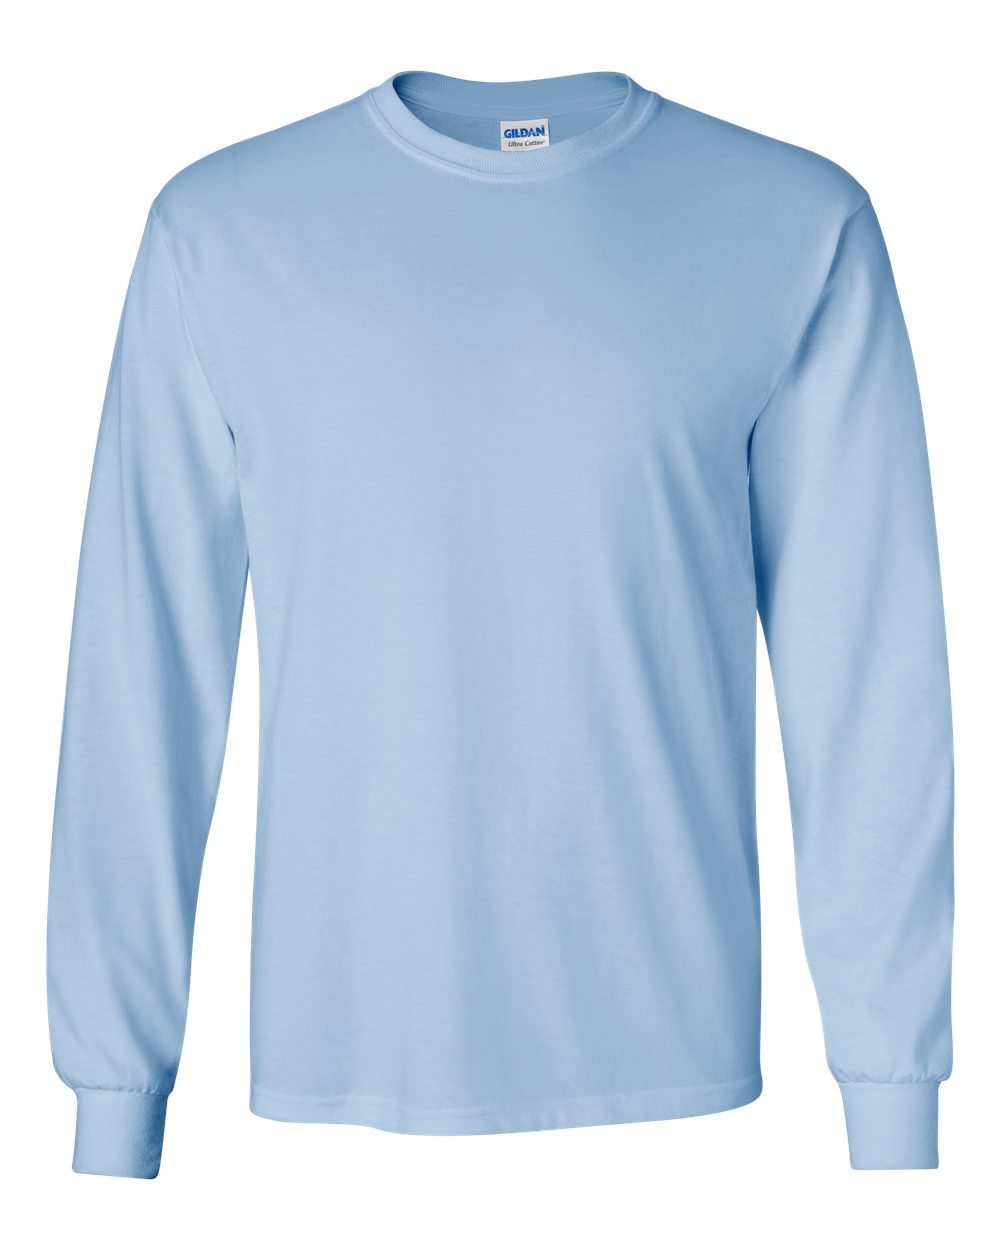 Unisex Long Sleeve T-Shirt | Cheer